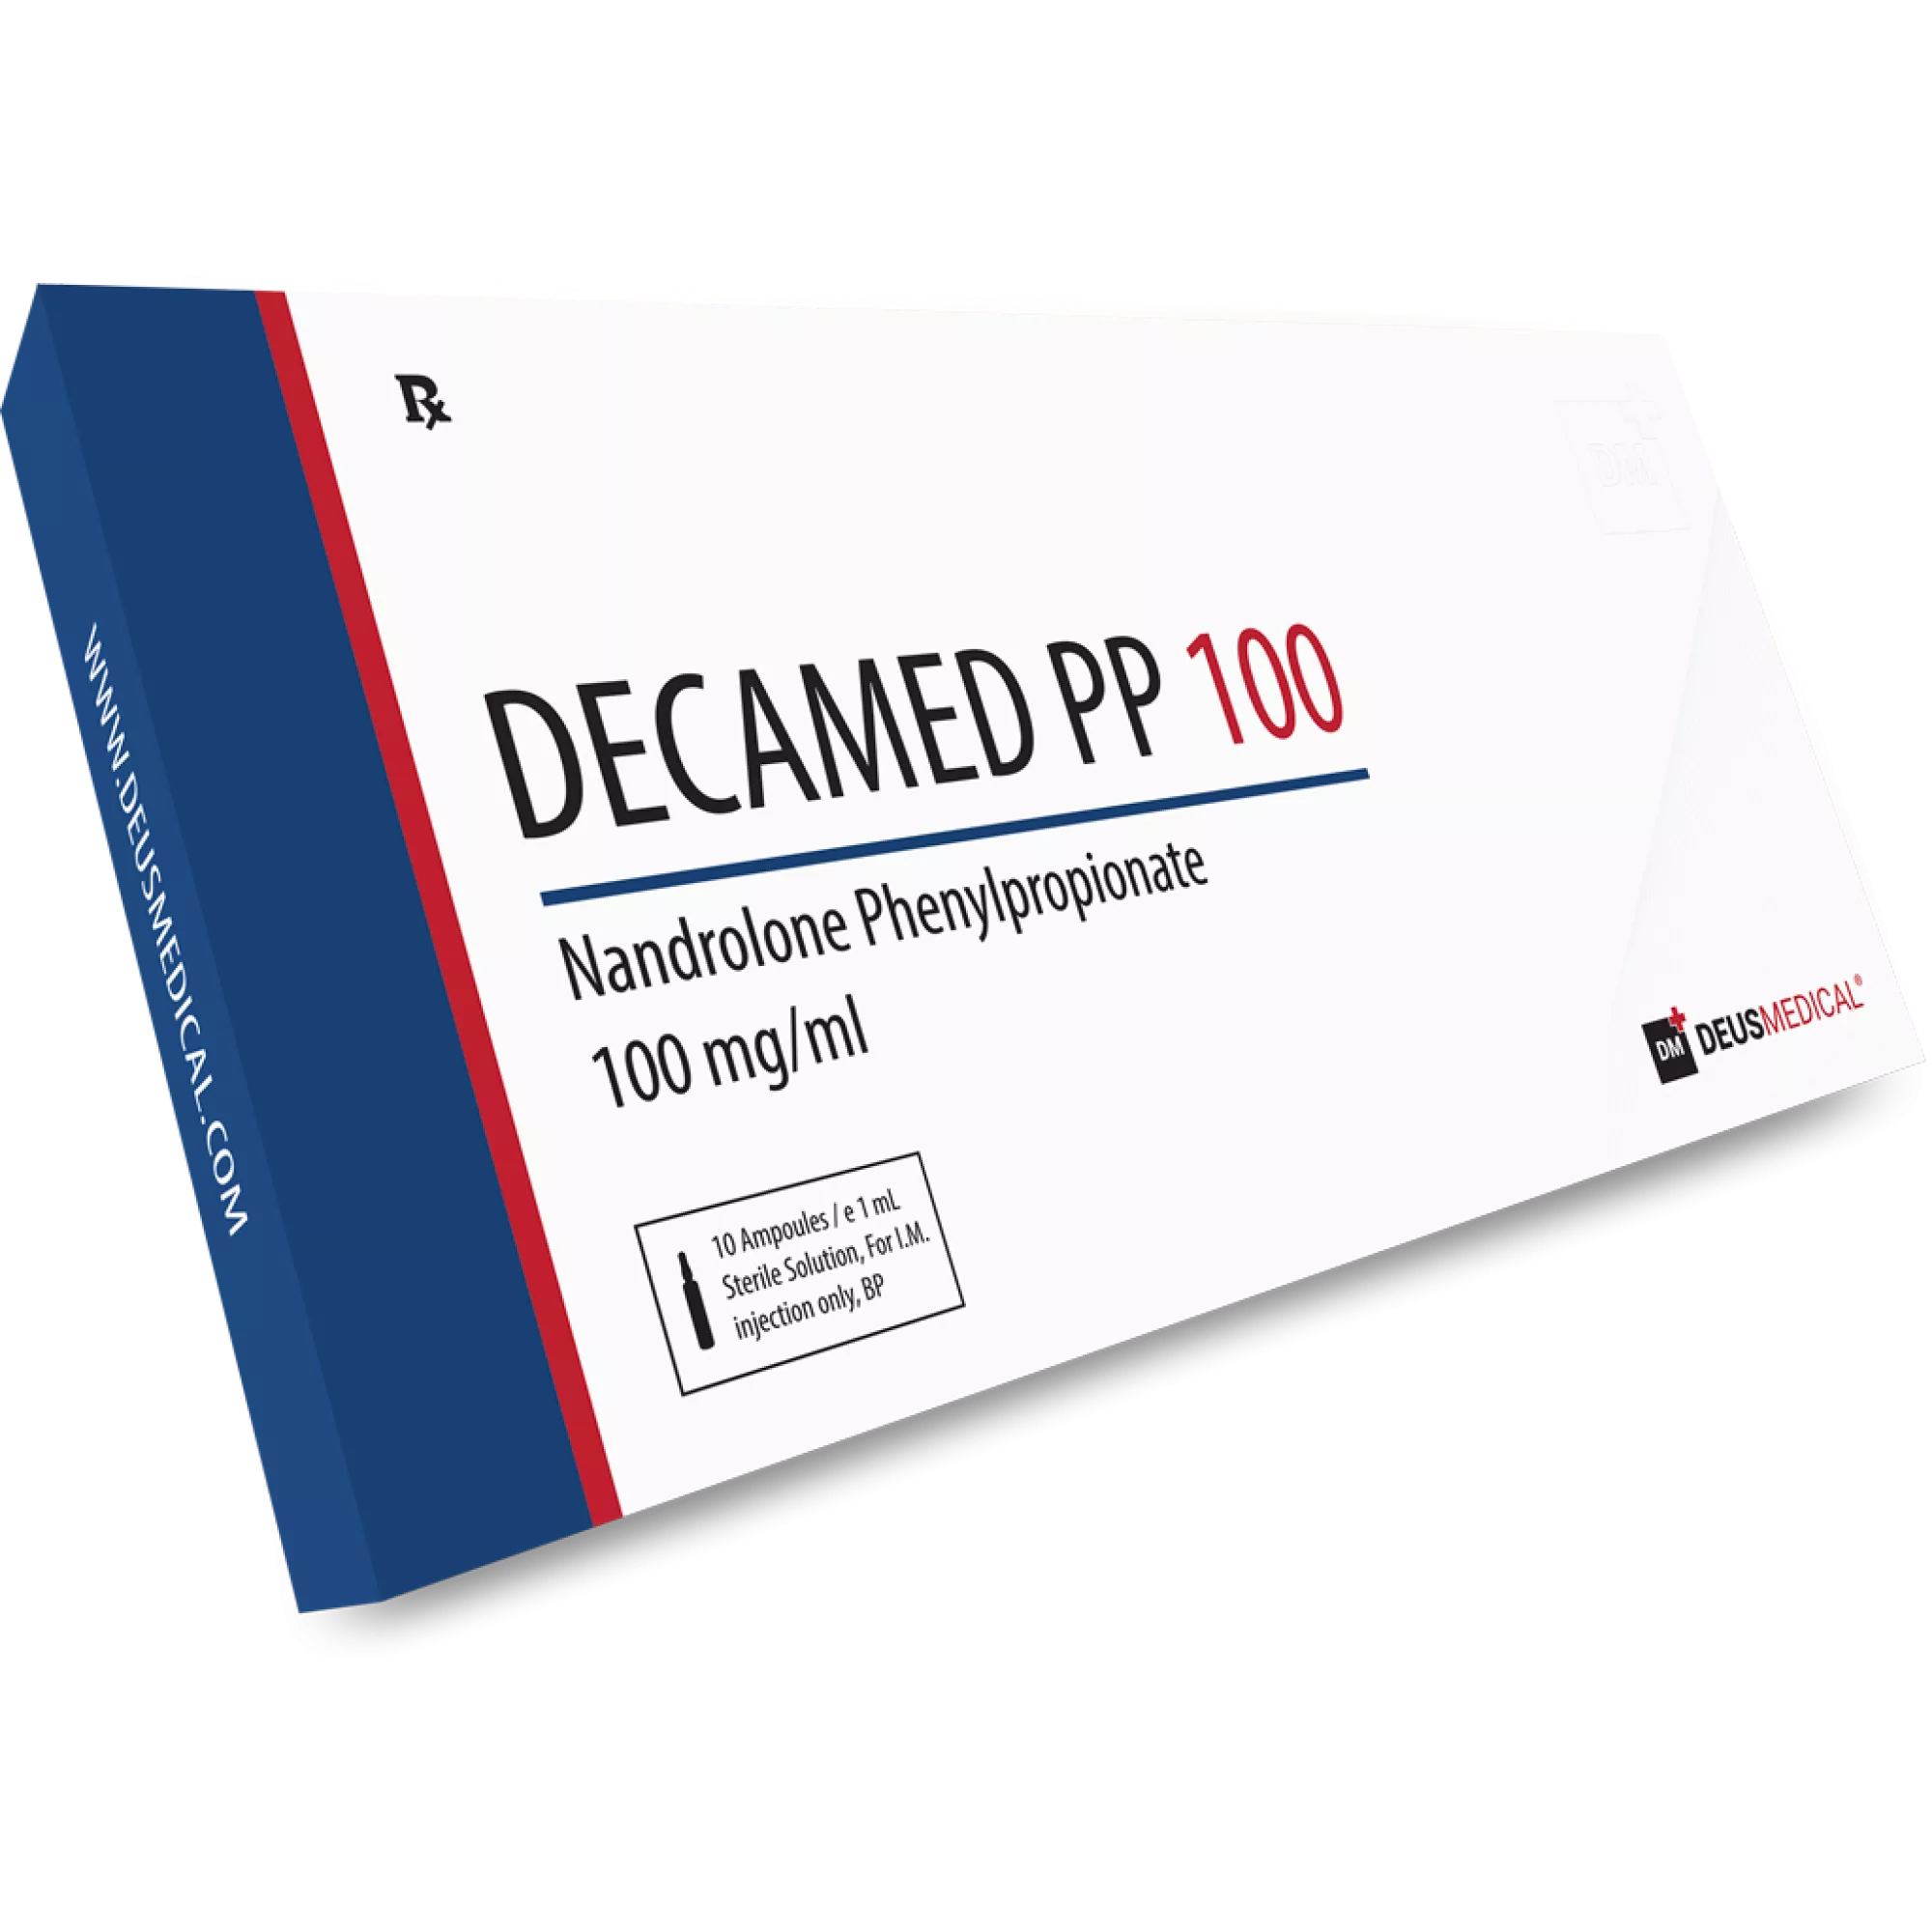 DECAMED PP 100 (Nandrolone Phenylpropionate), Deus Medical, Köp steroider online - www.deuspower.shop